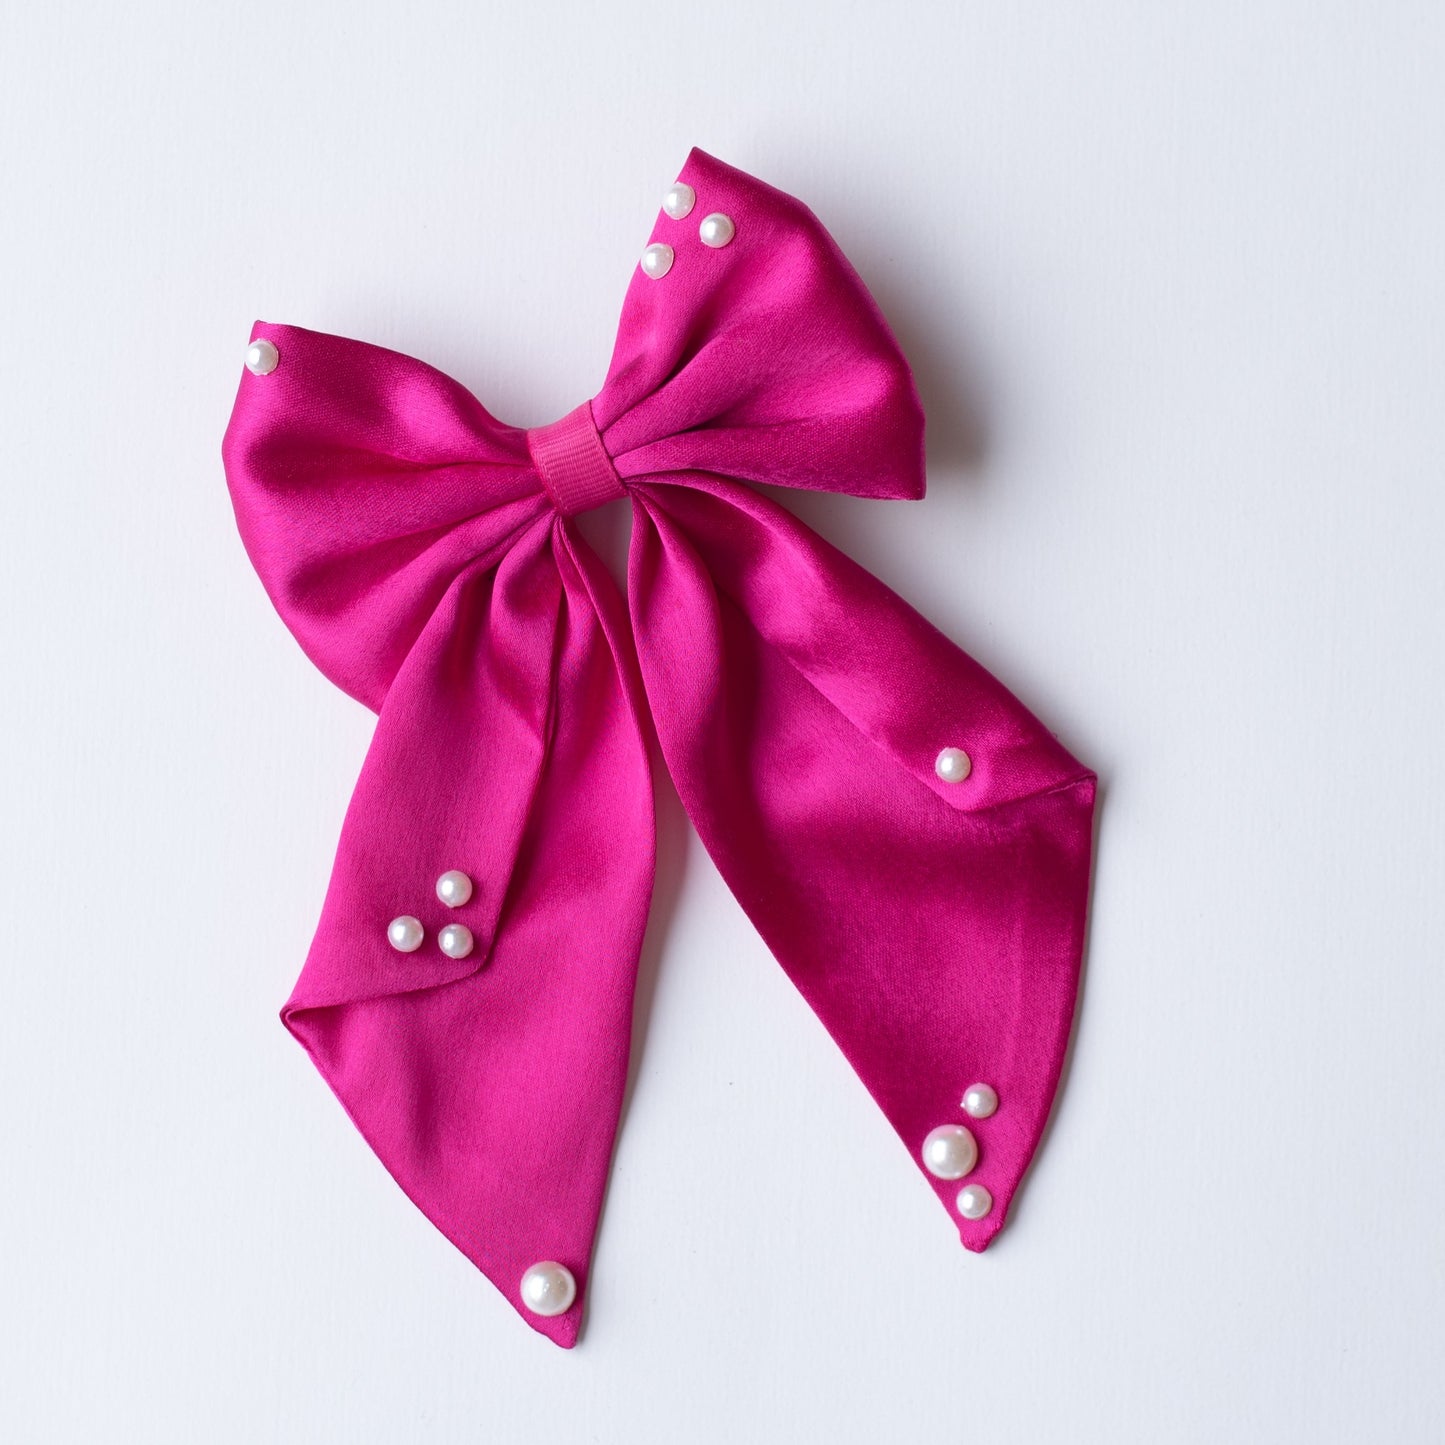 Big fancy satin bow on alligator clip embellished with pearls - Dark Pink